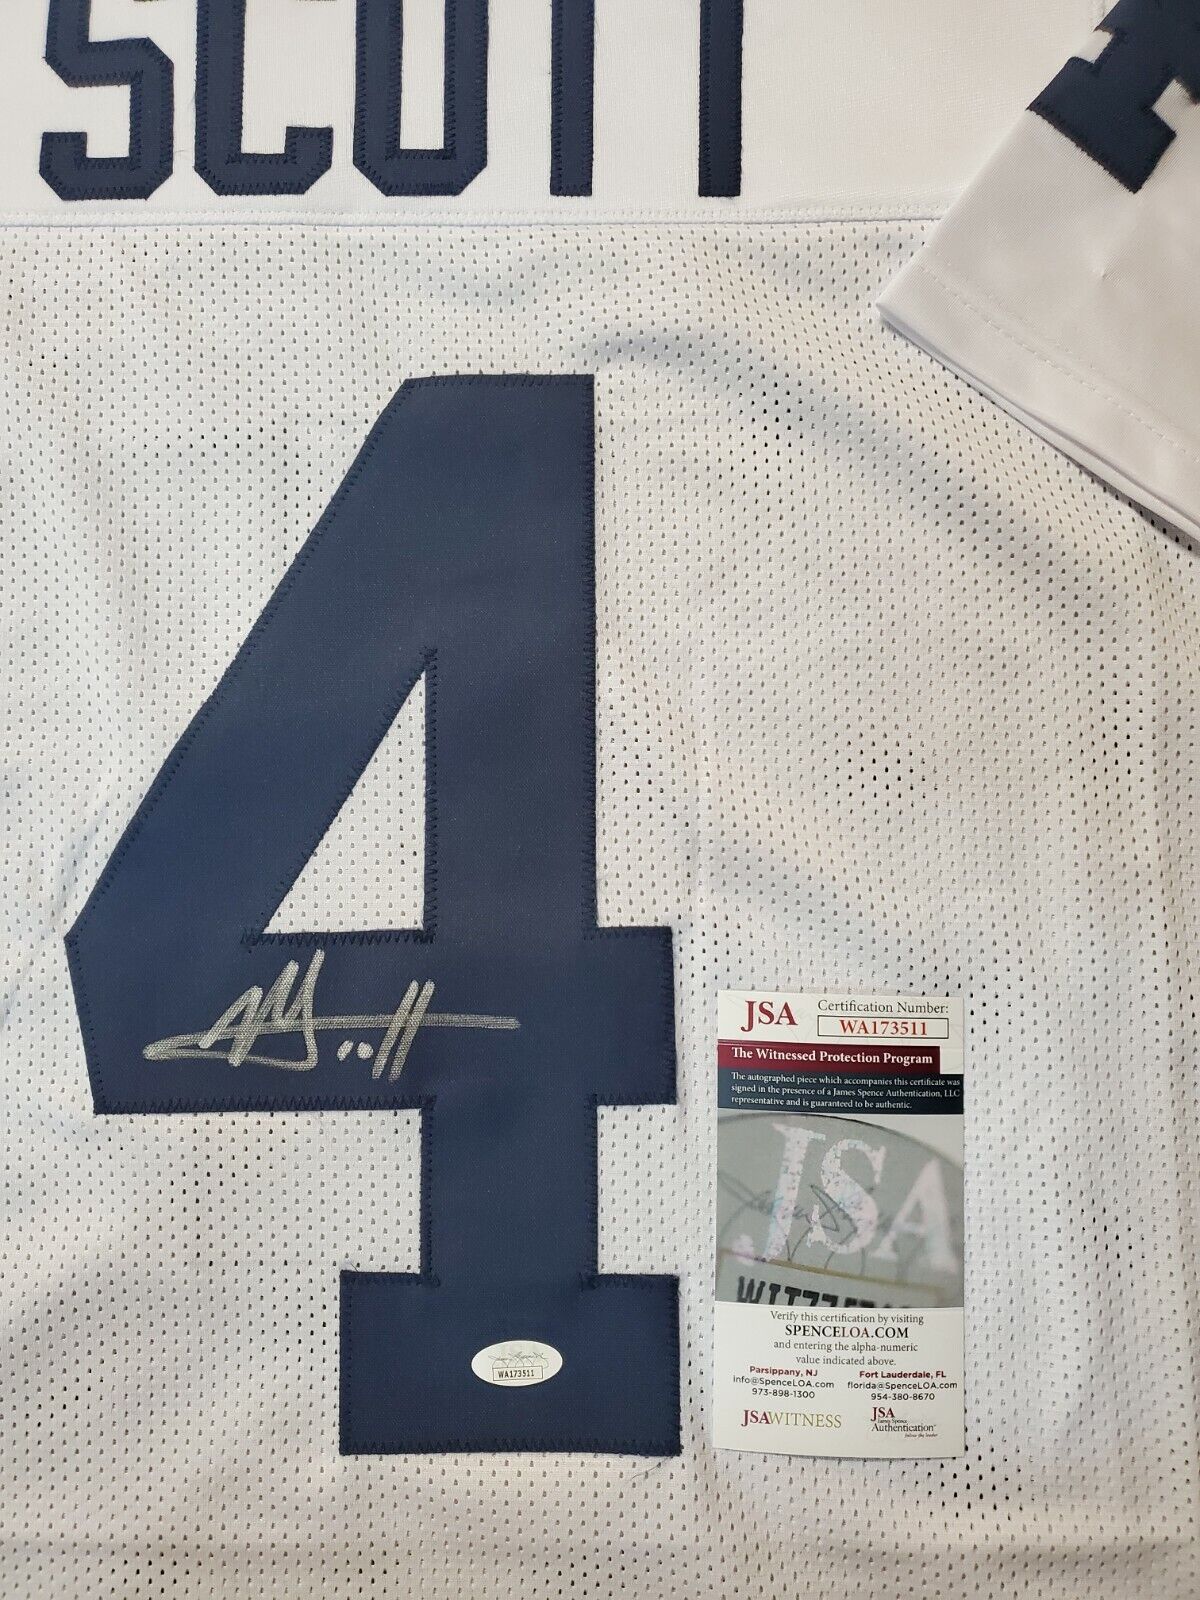 MVP Authentics Penn State Nick Scott Autographed Signed Jersey Jsa Coa 112.50 sports jersey framing , jersey framing